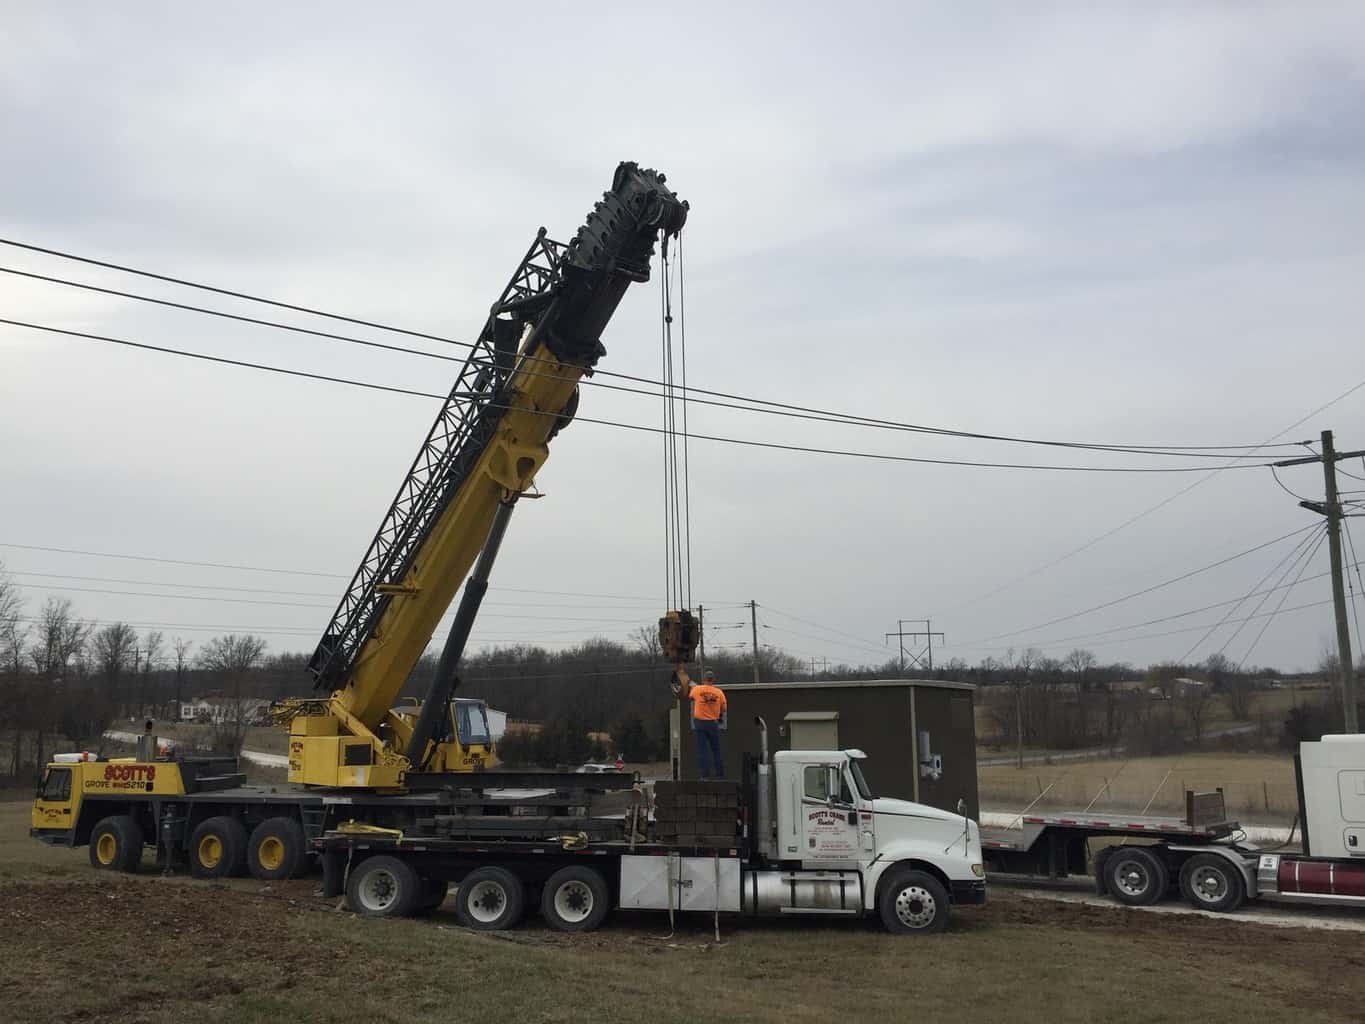 A crane lifting a power hub off of a flatbed truck.